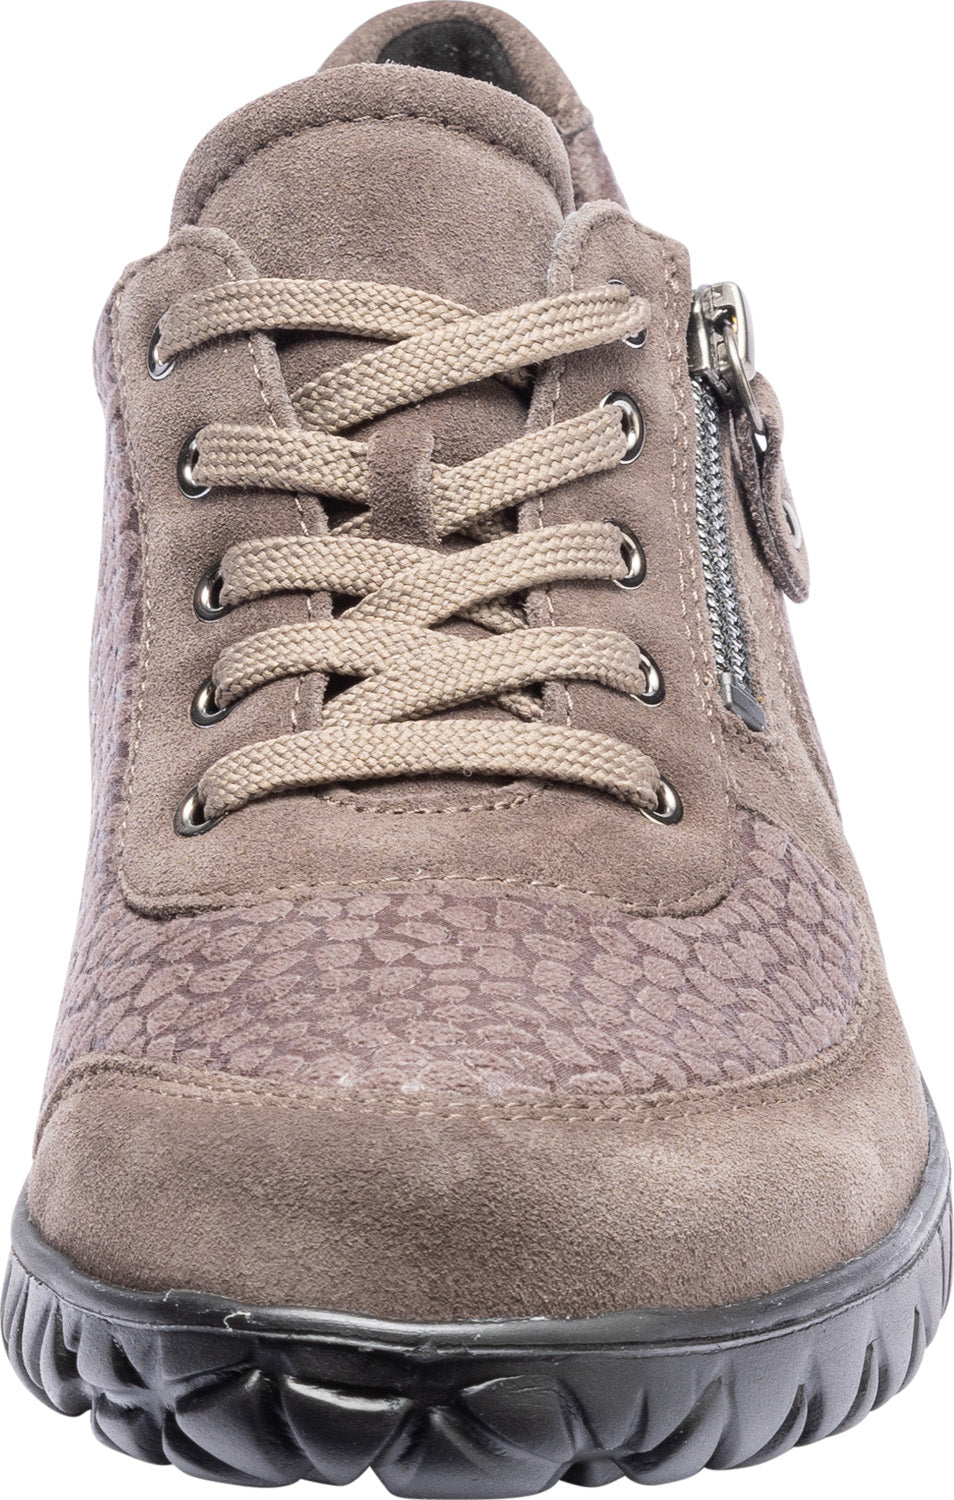 Waldlaufer H89001 218 190 Havy Soft Ladies Mouse Brown Leather & Textile Zip & Lace Shoes